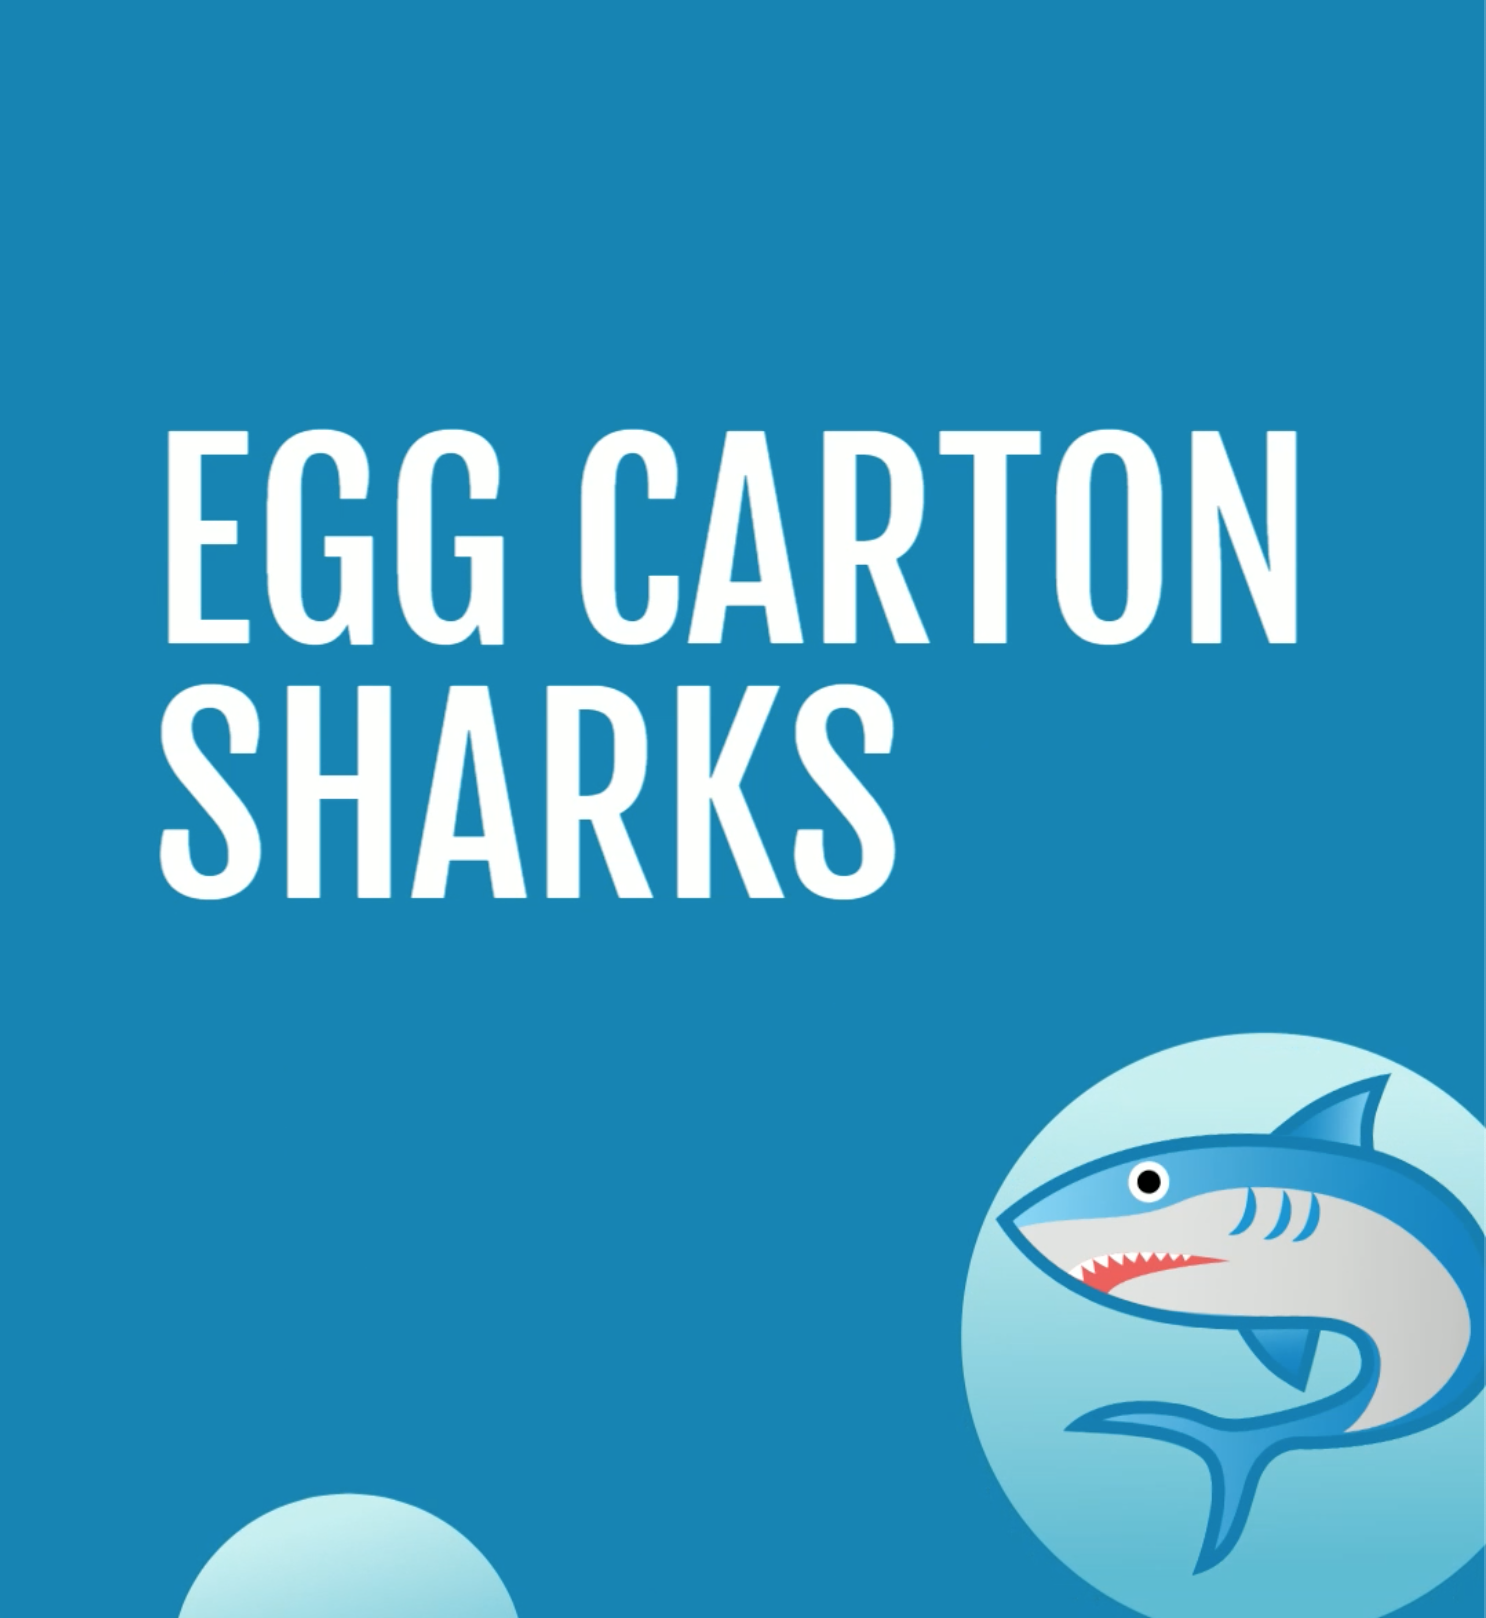 egg carton sharks